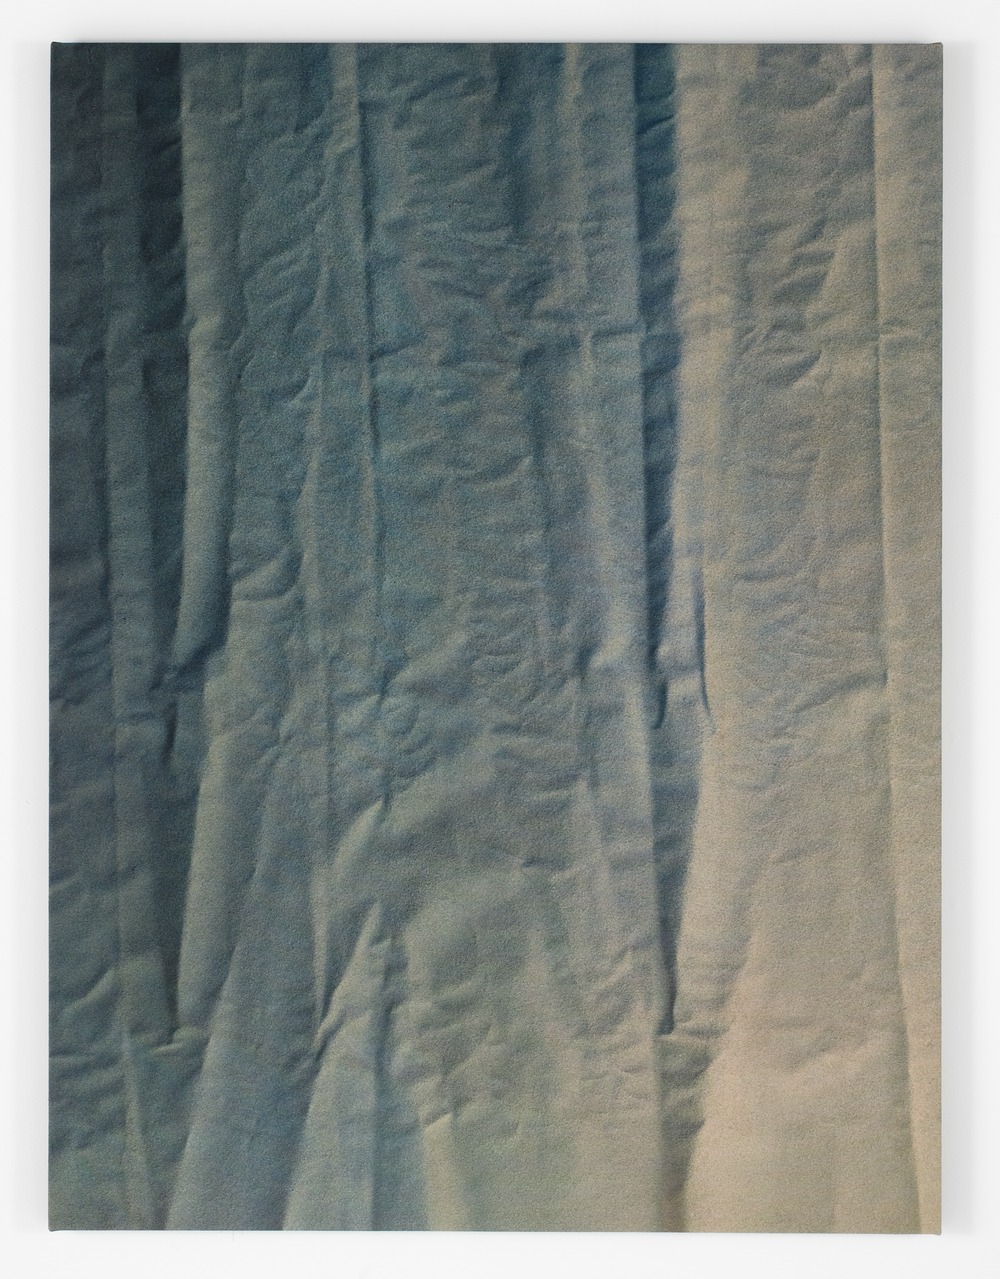 0237 Untitled (Fold)-Tauba-Auerbach-large.jpg